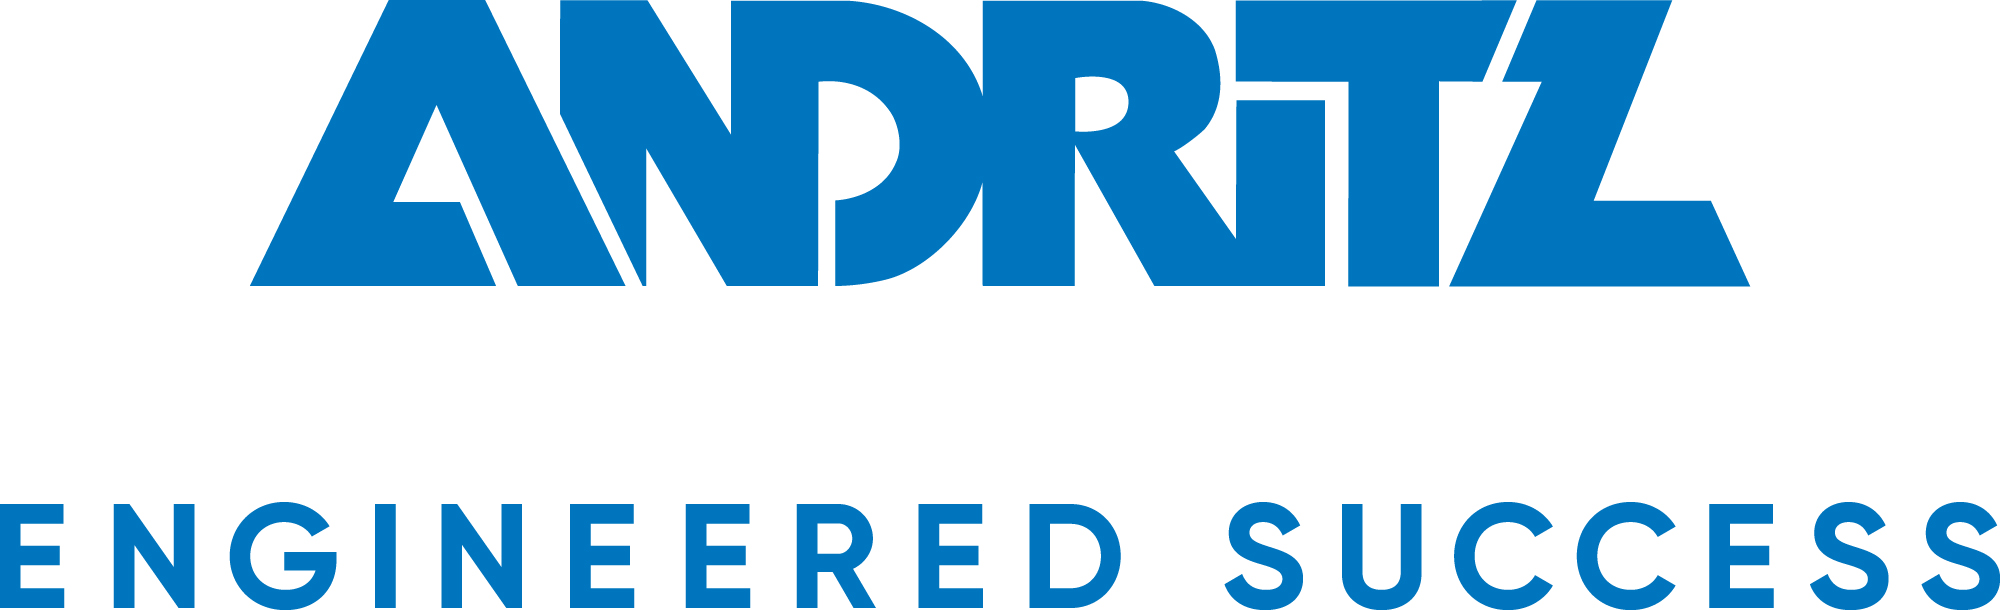 ANDRITZ Logo&Claim blue RGB